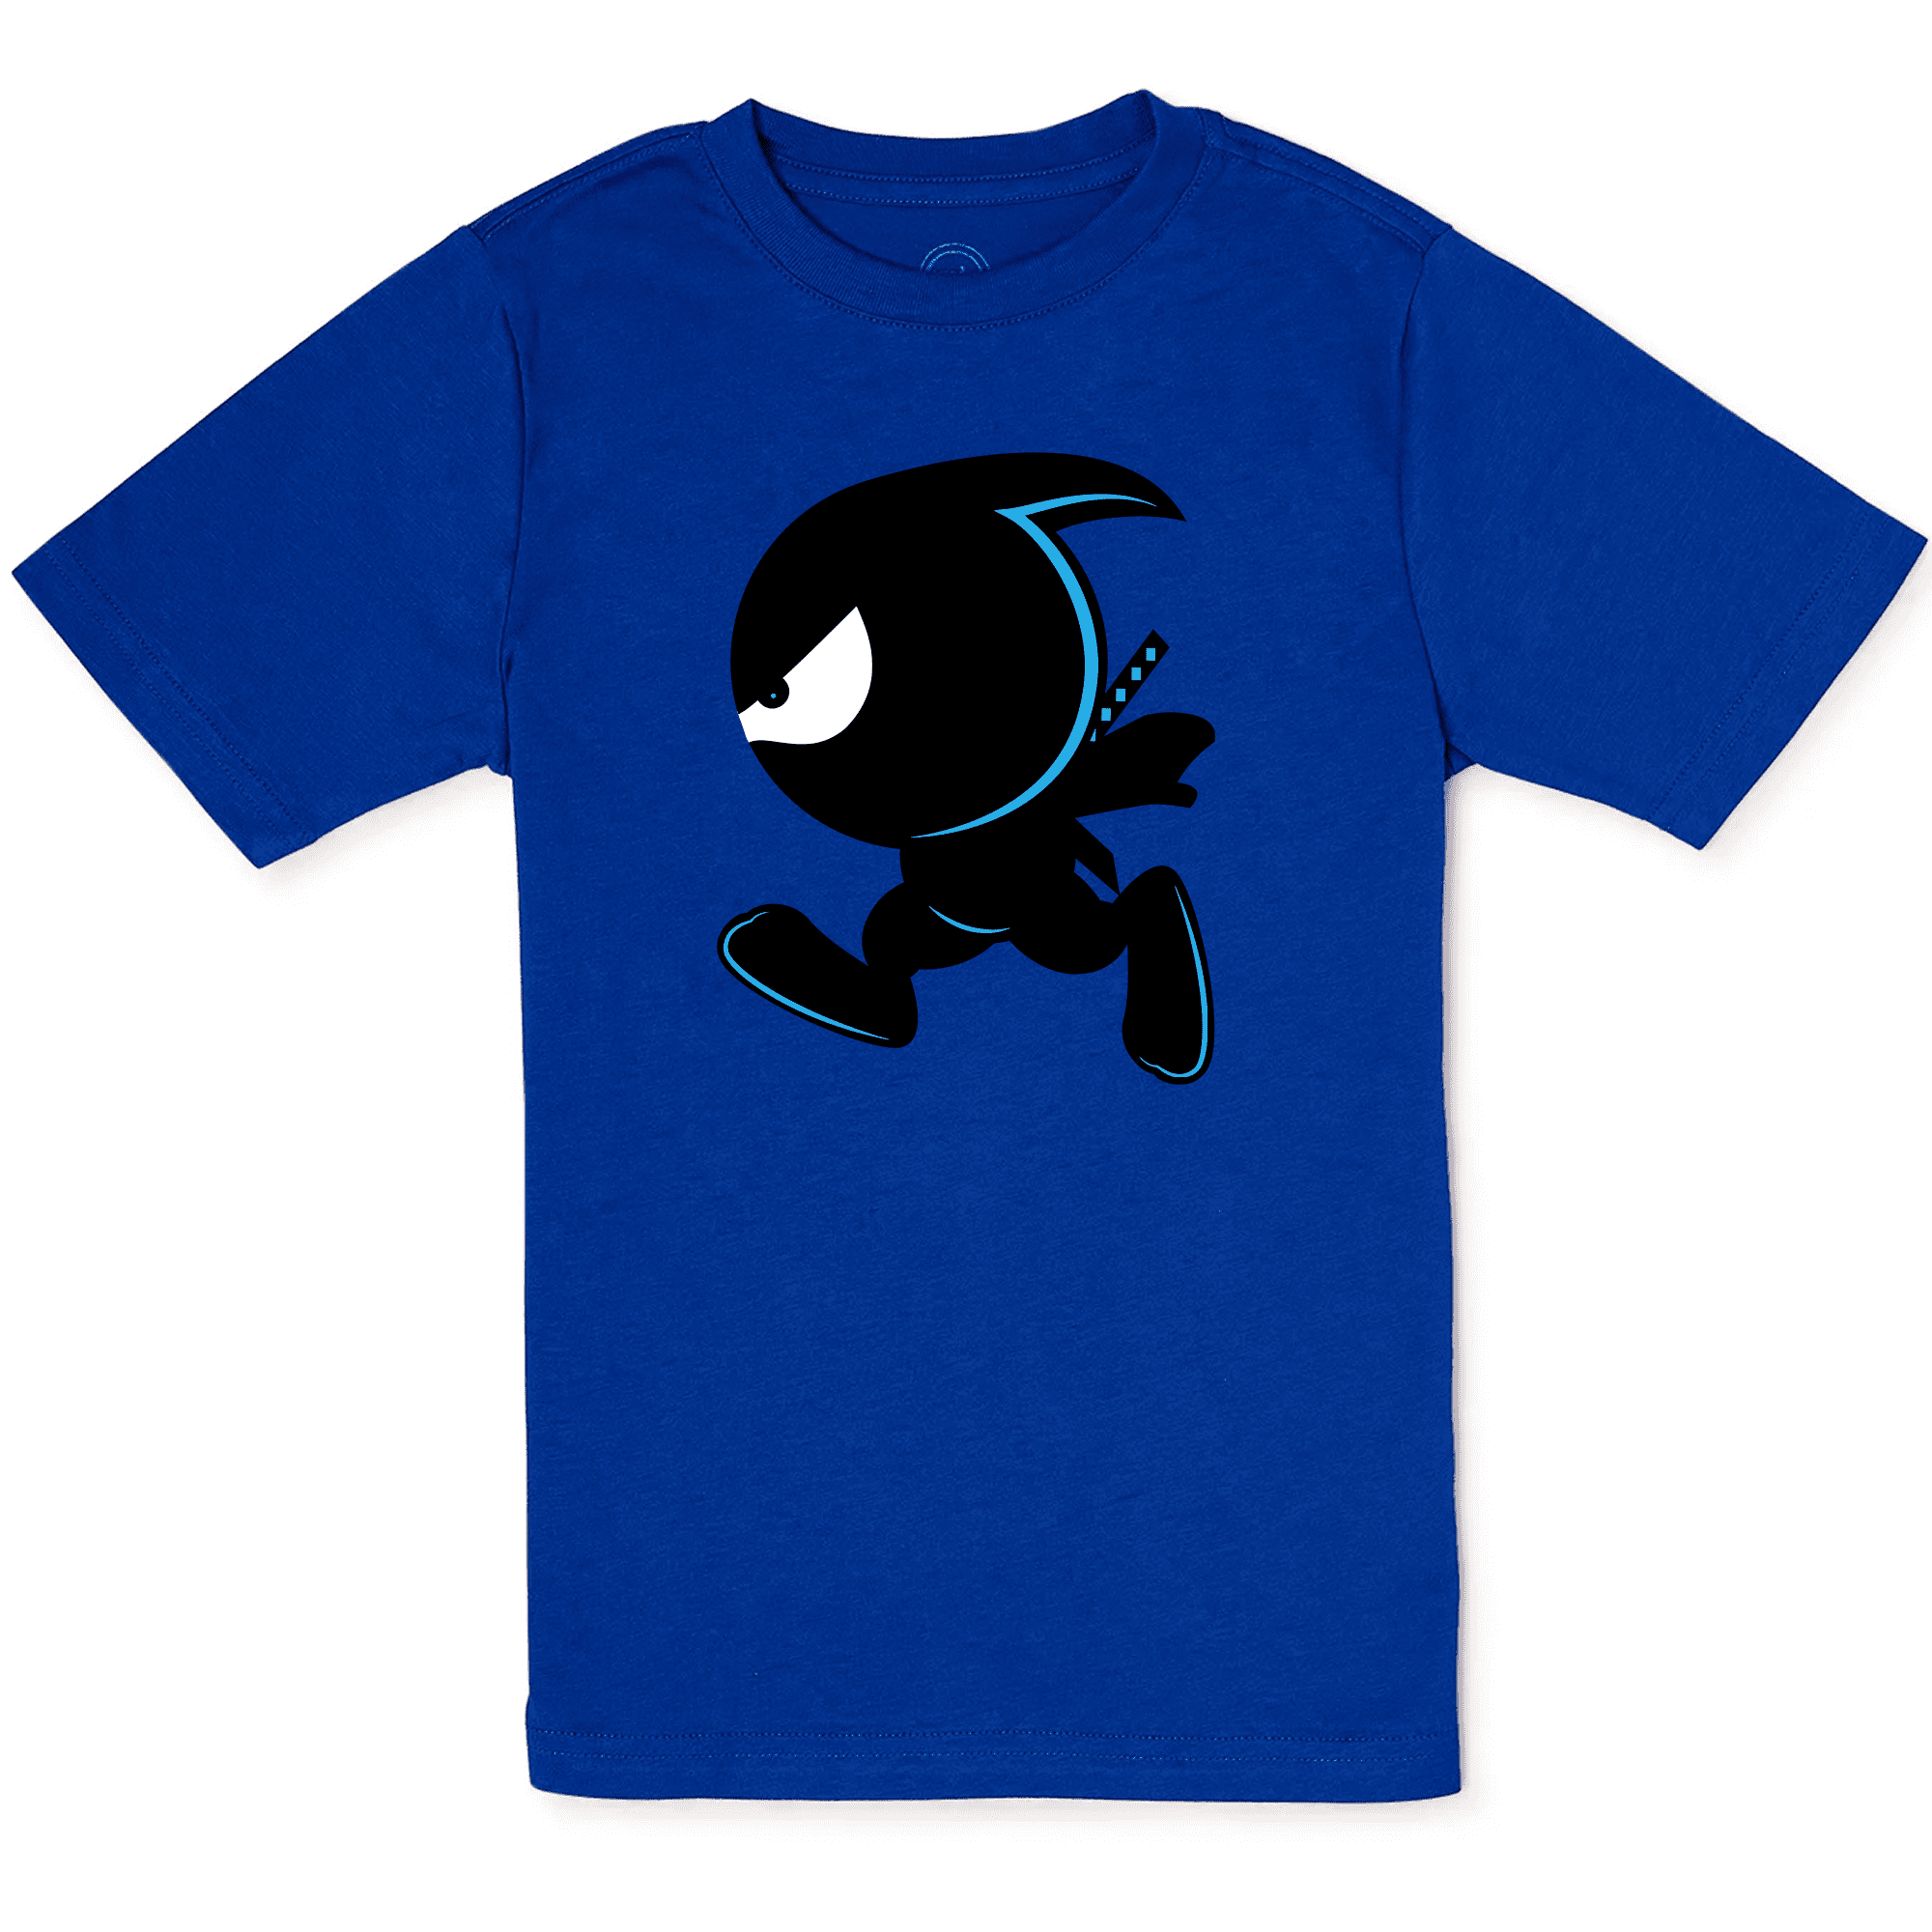 Ninja Tee for Kids - Dress Your Ninja Kid in Cool Gear! Size 14-16